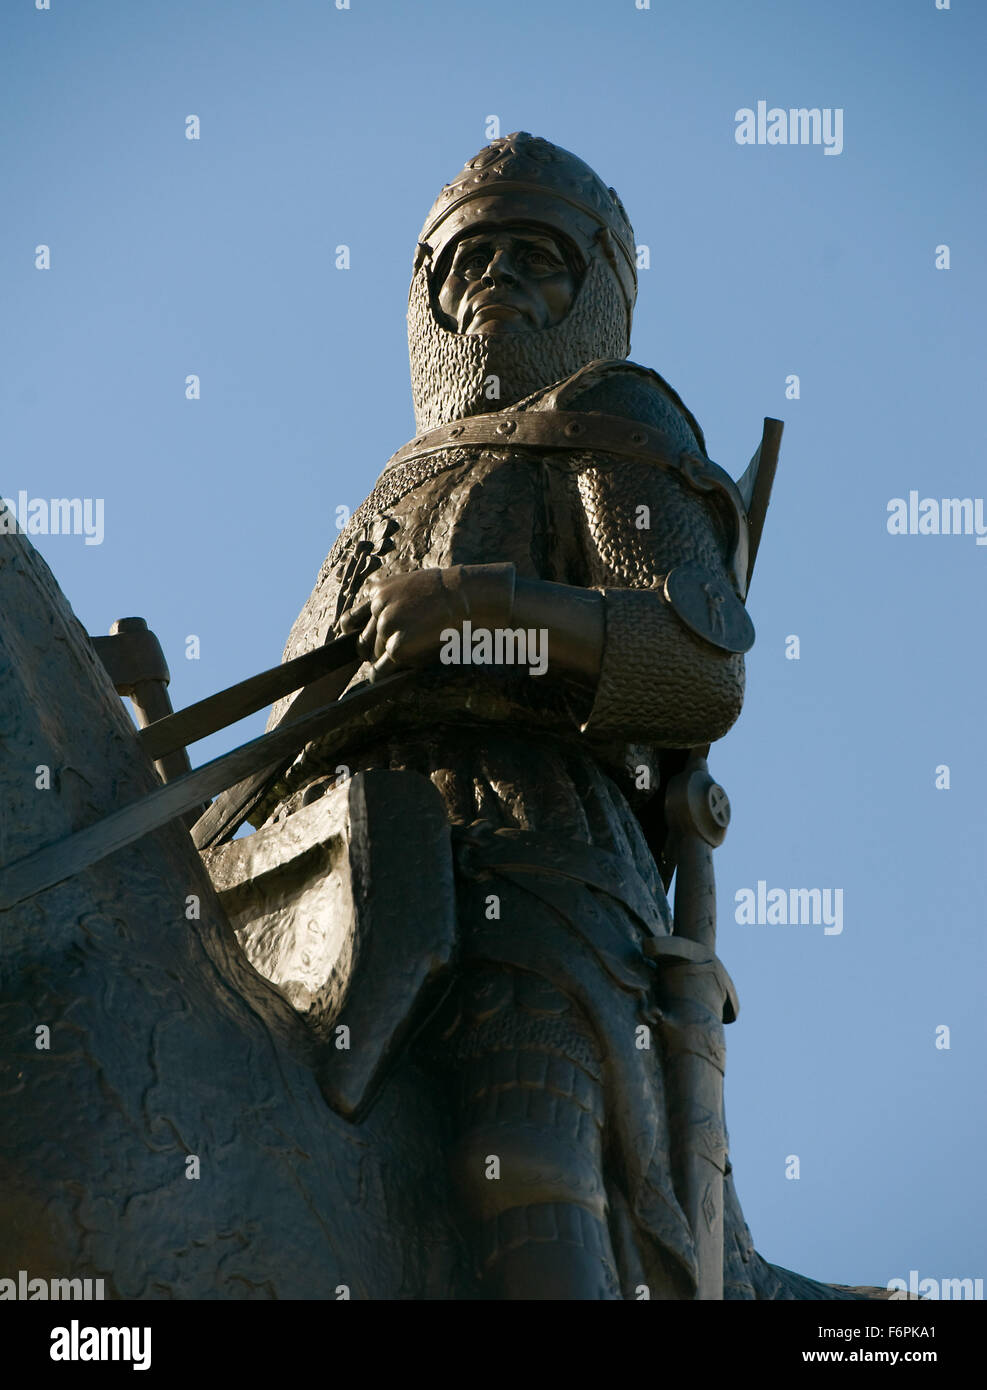 Robert The Bruce Statue at the Battle of Bannockburn visitors attraction, Bannockburn, Stirlingshire, Scotland, Britain Stock Photo